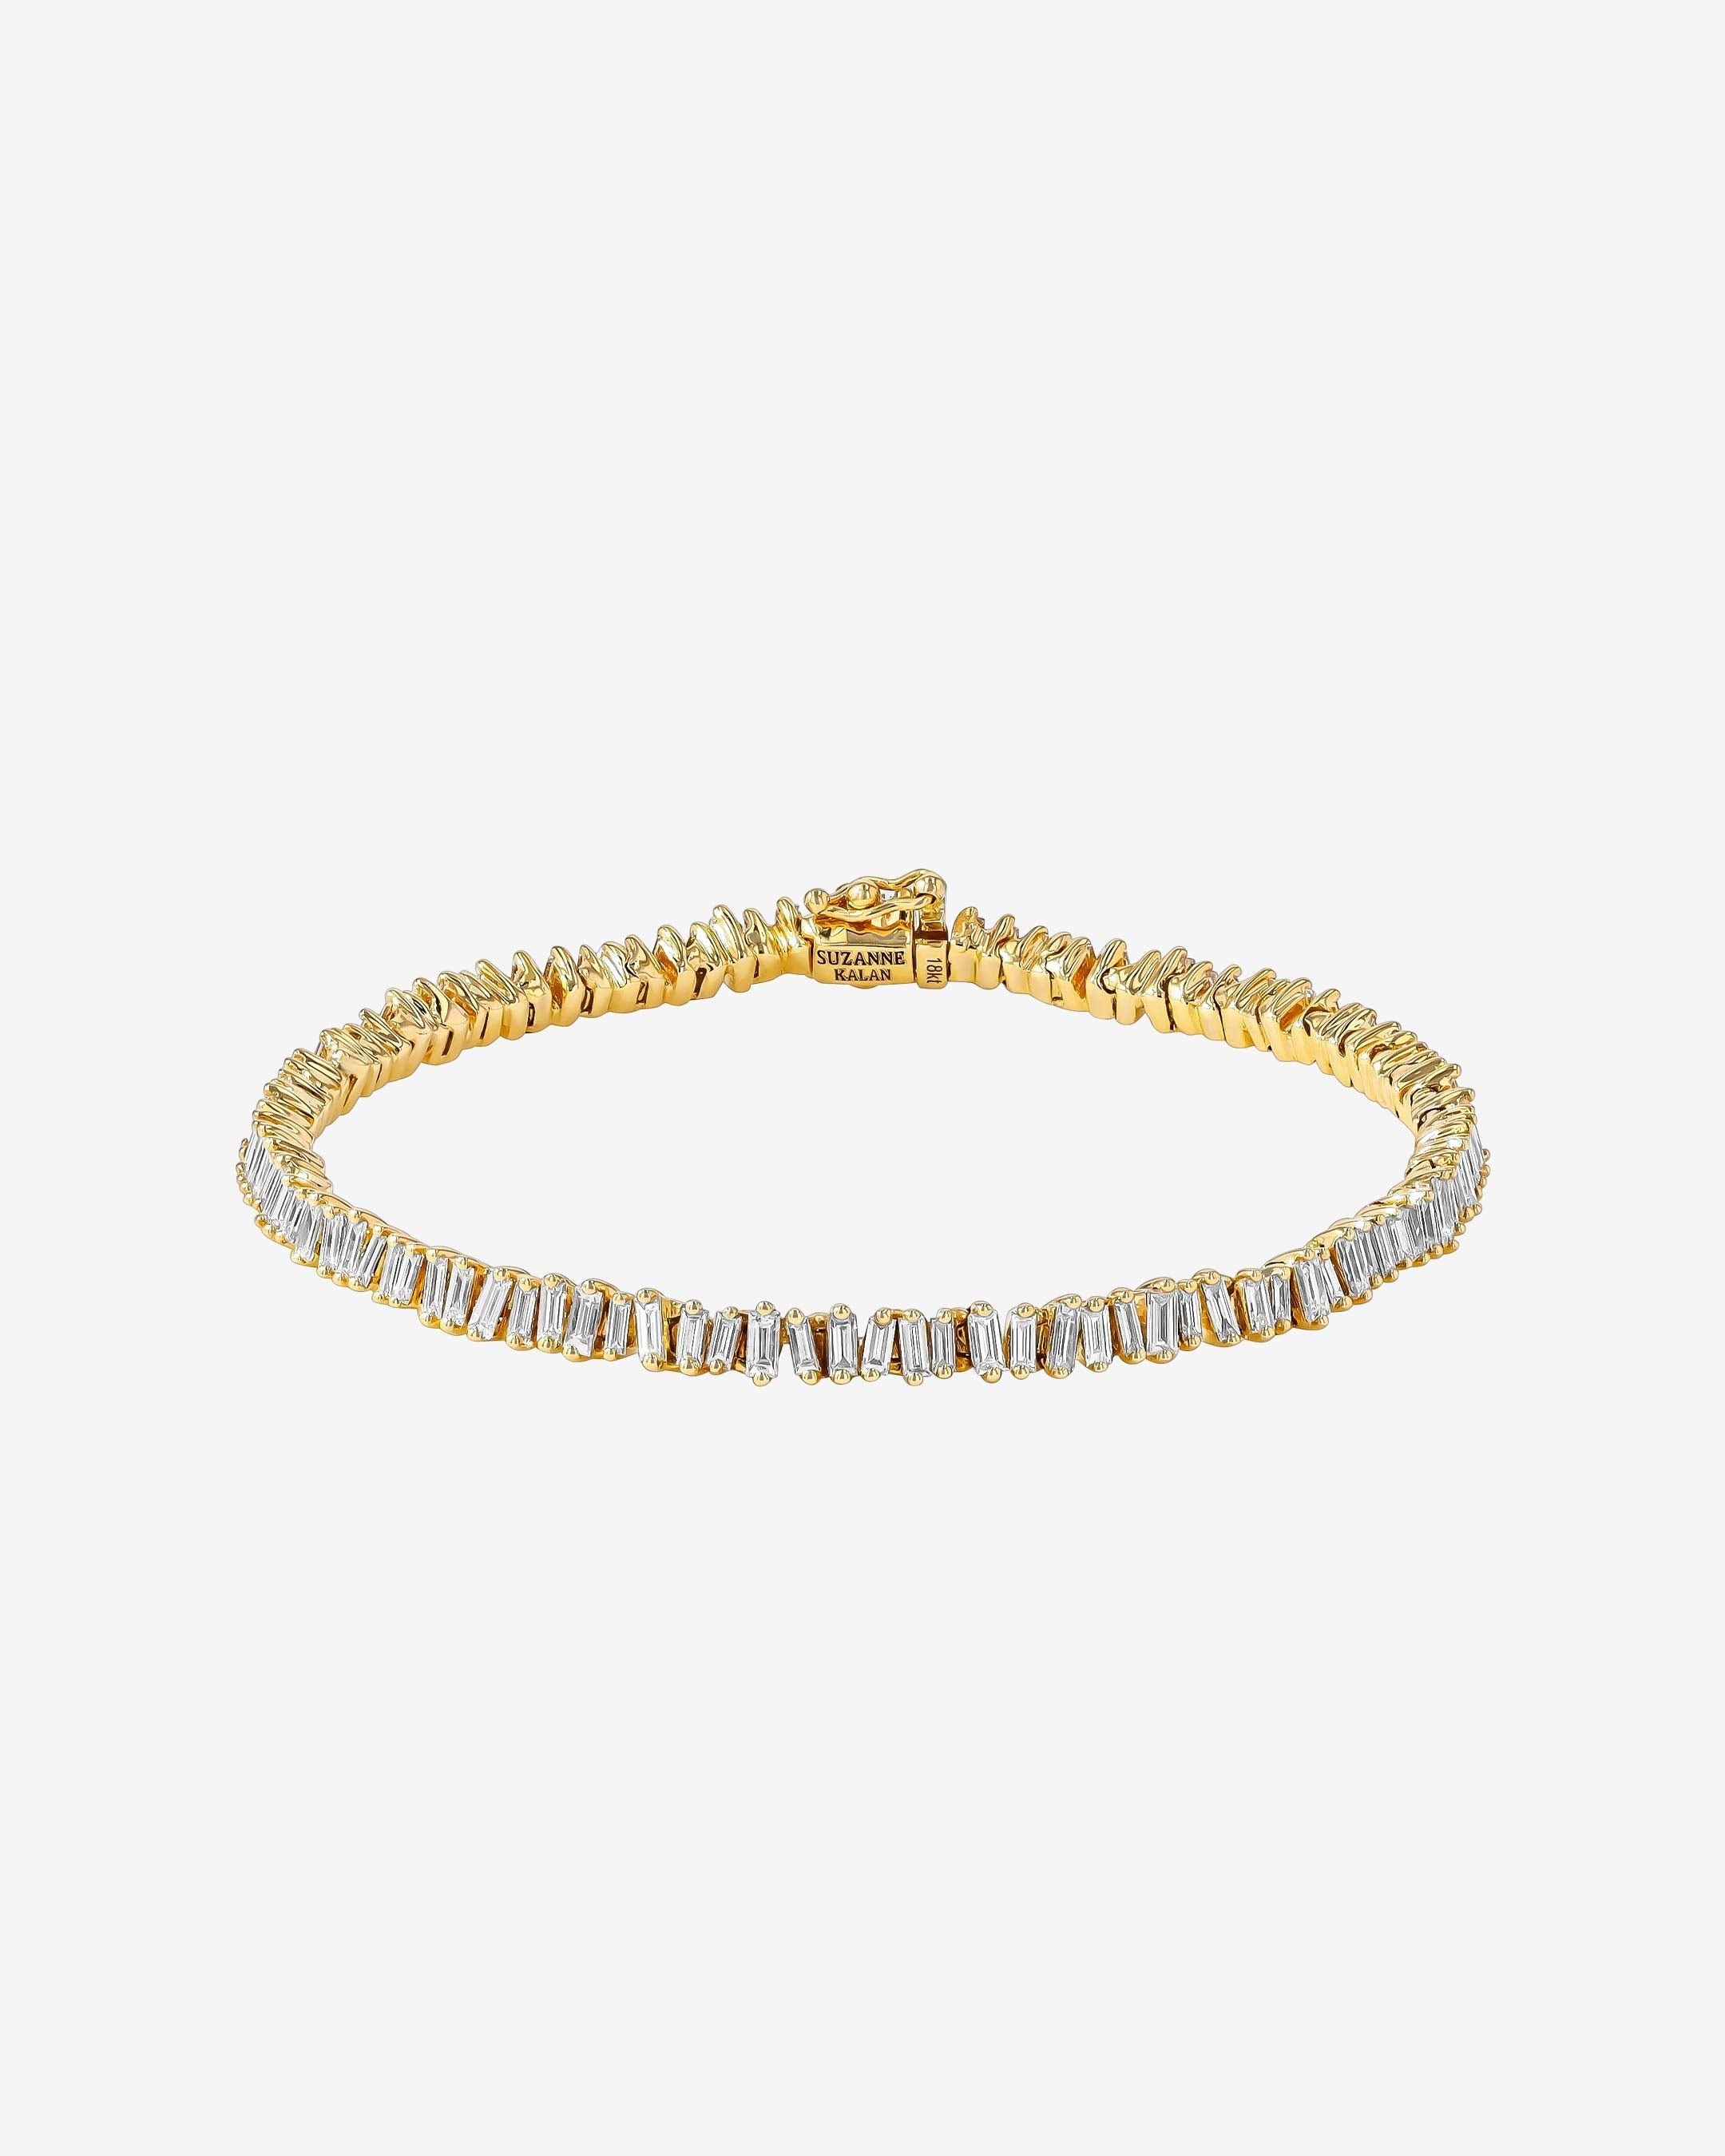 Suzanne Kalan Classic Diamond Mini Baguette Tennis Bracelet in 18k yellow gold